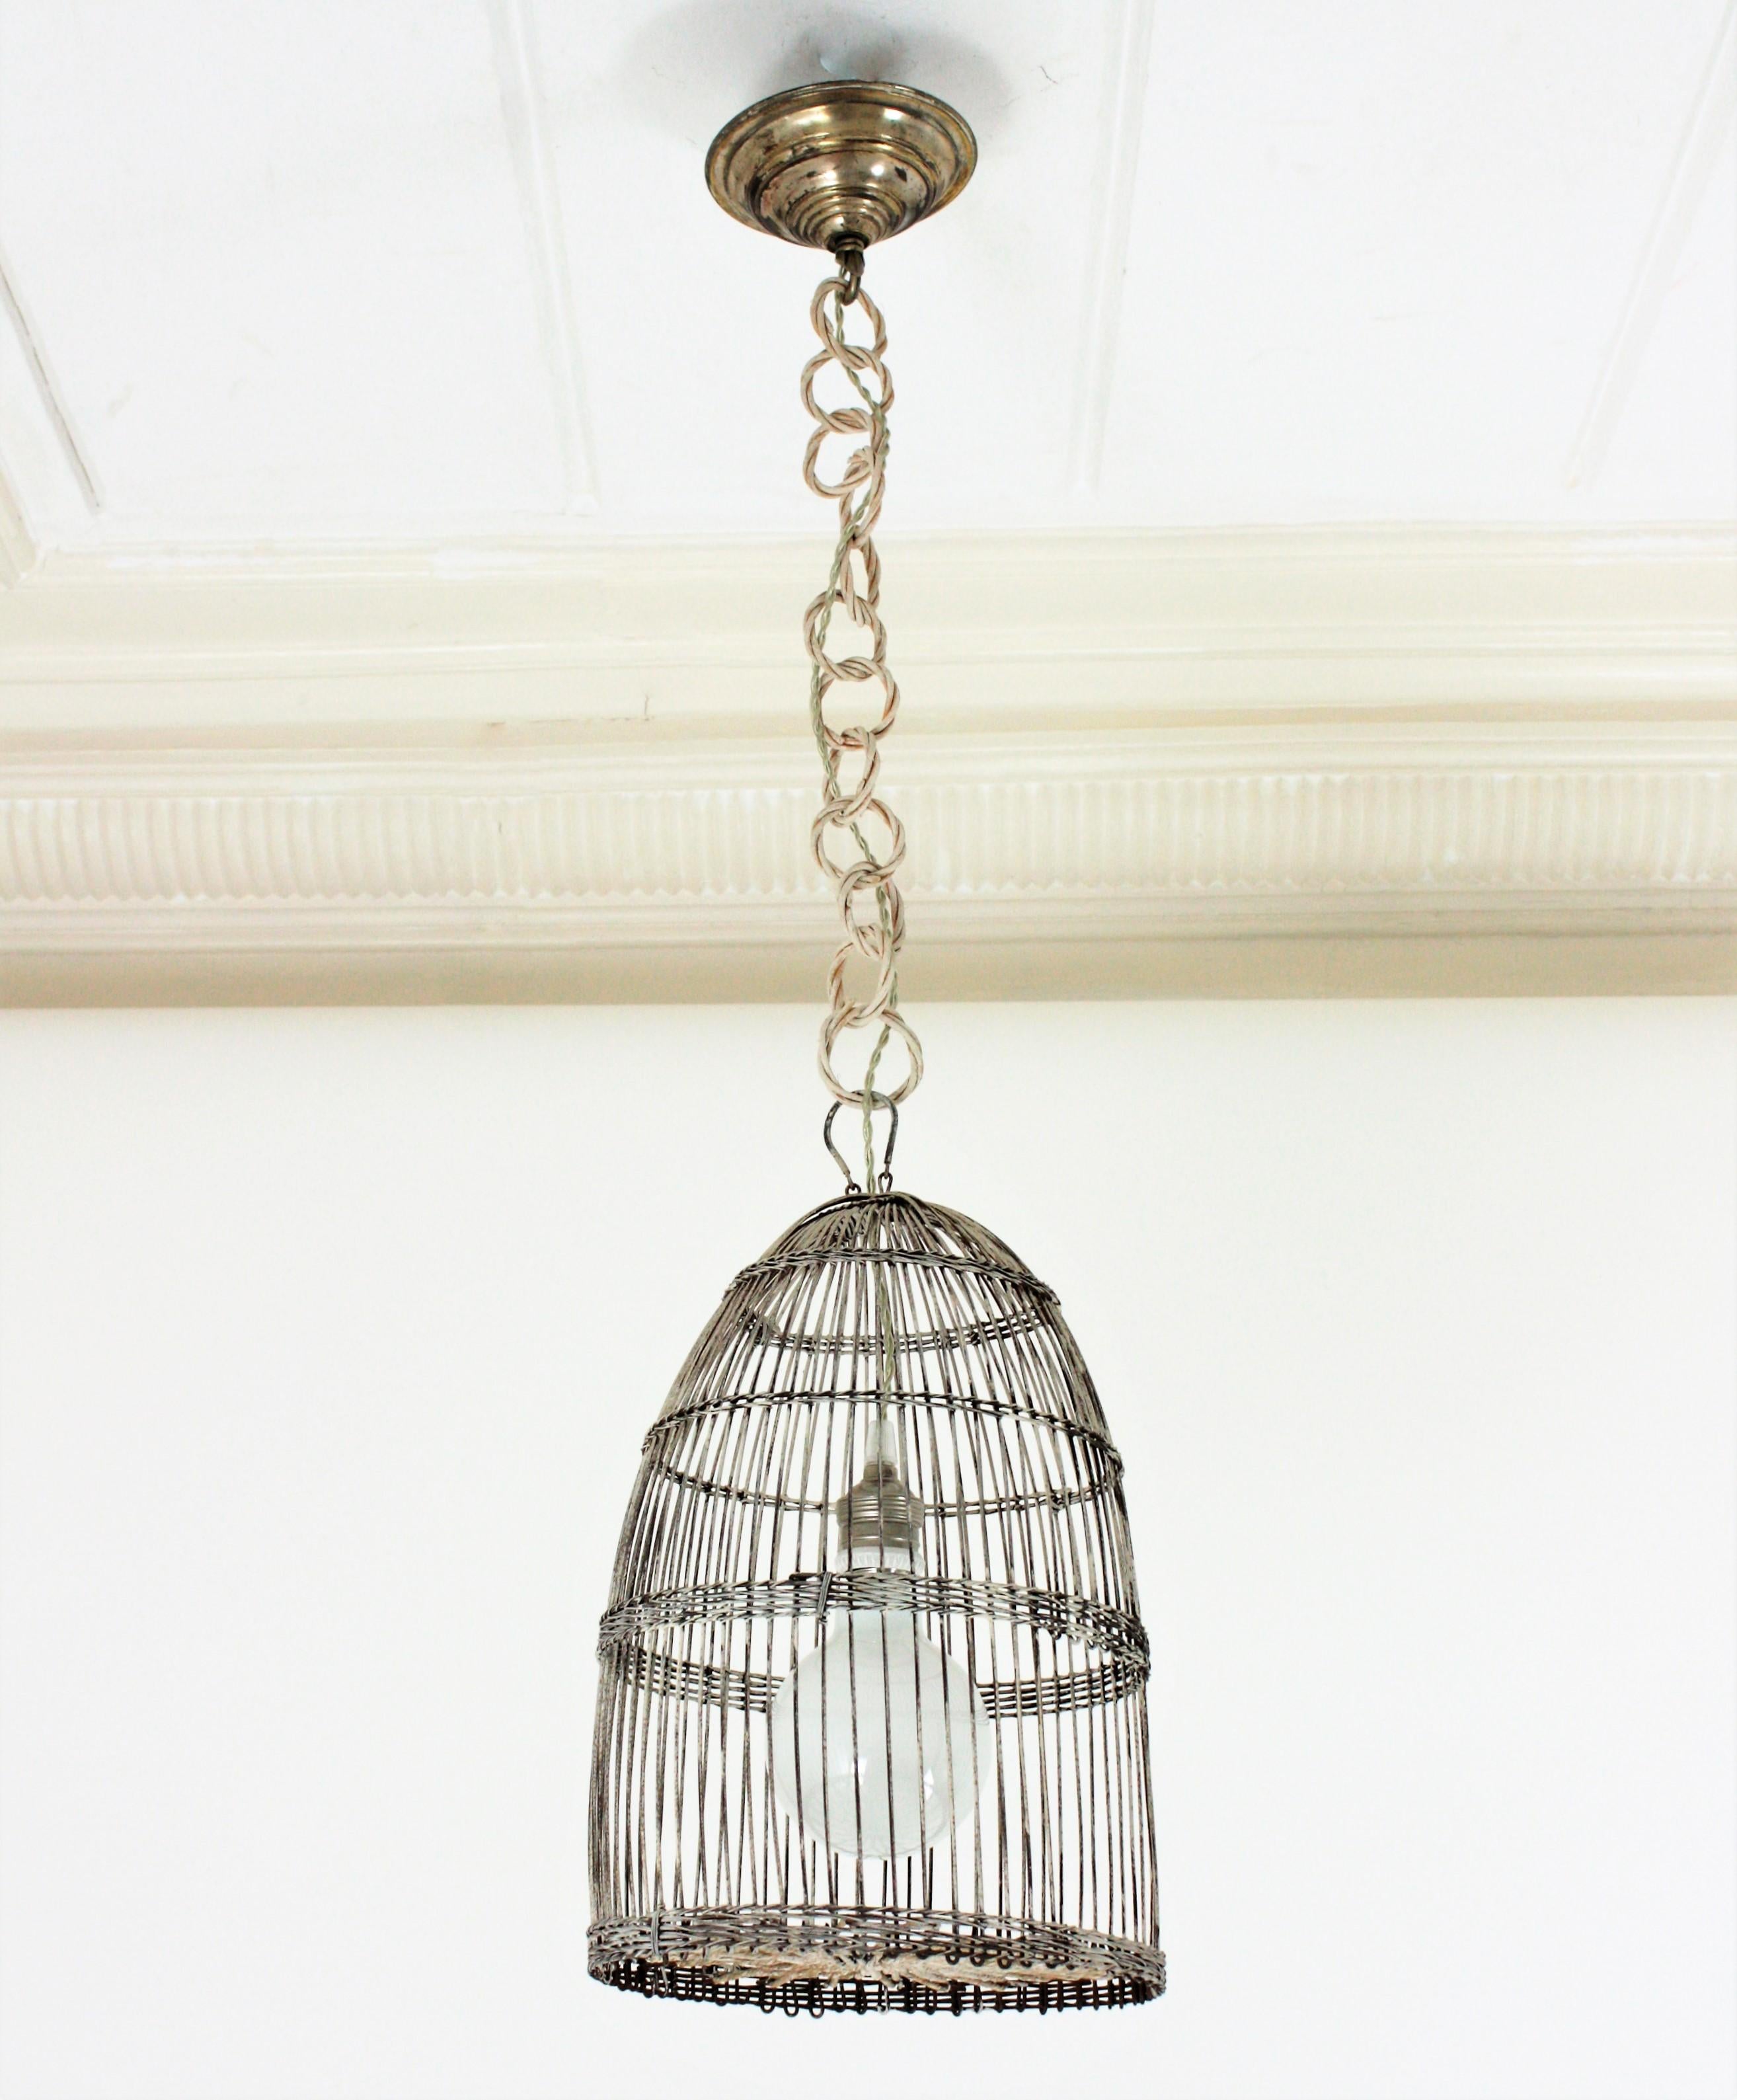 Birdcage Rustic Hanging Light Pendant Lamp 13